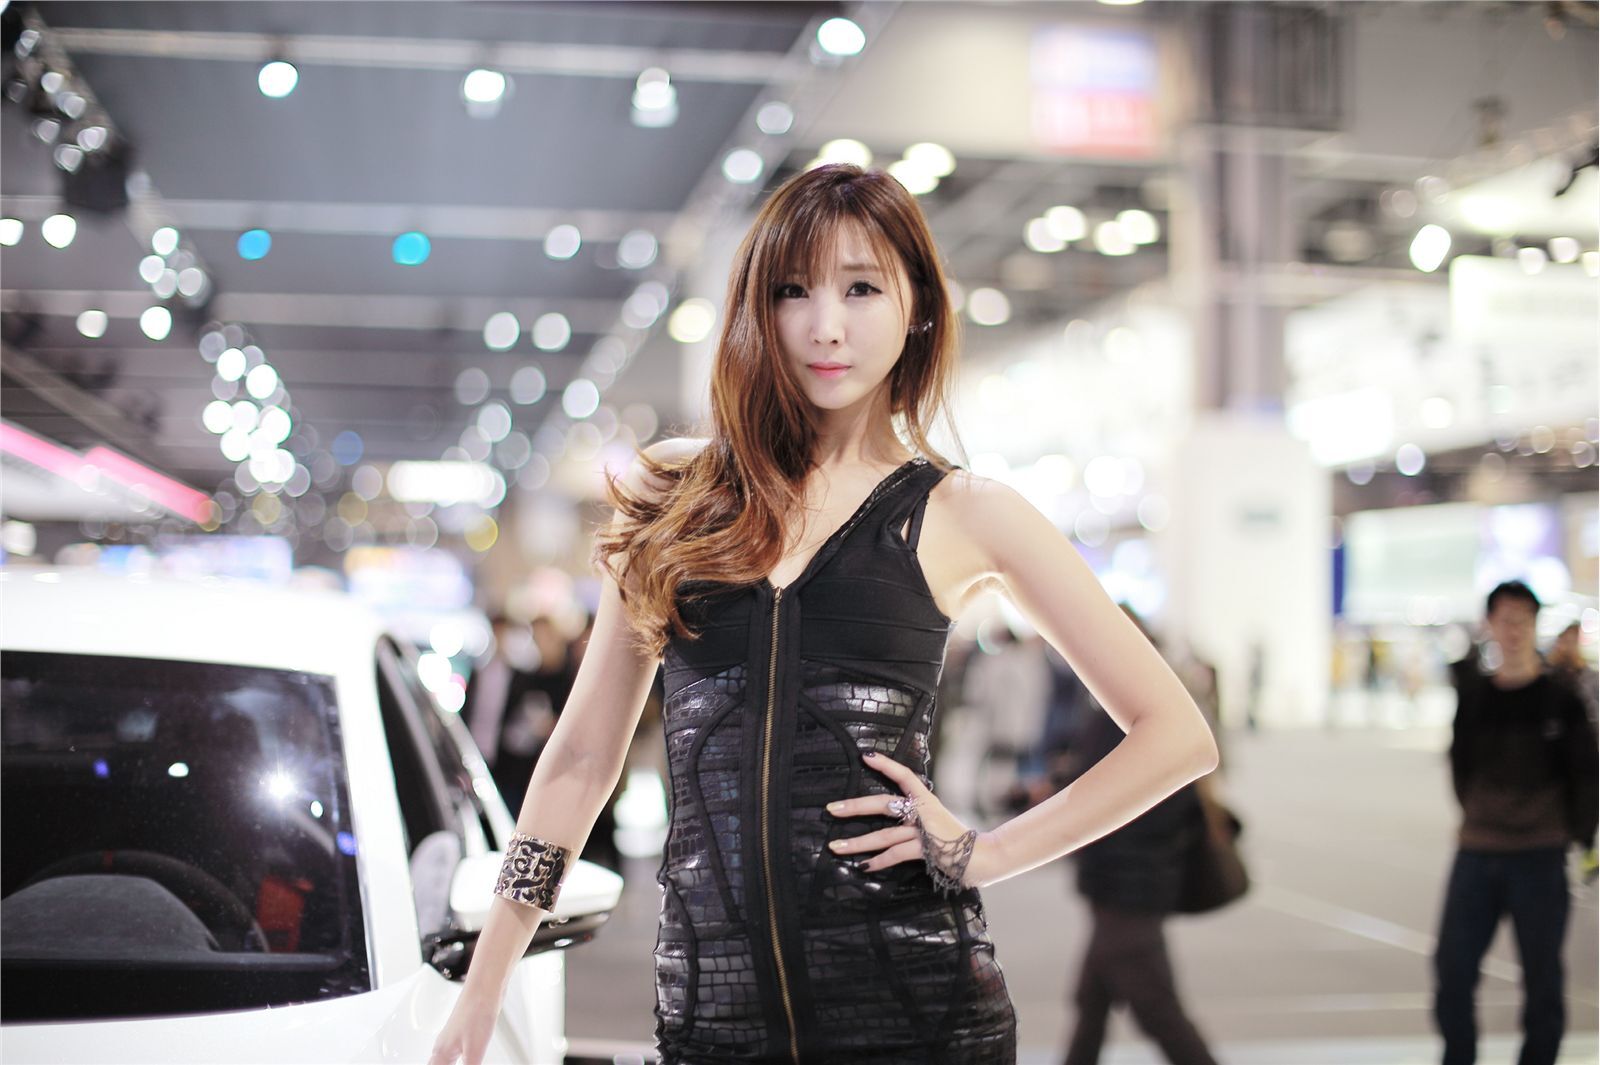 2015 Korea International Auto Show super car model Li liuen